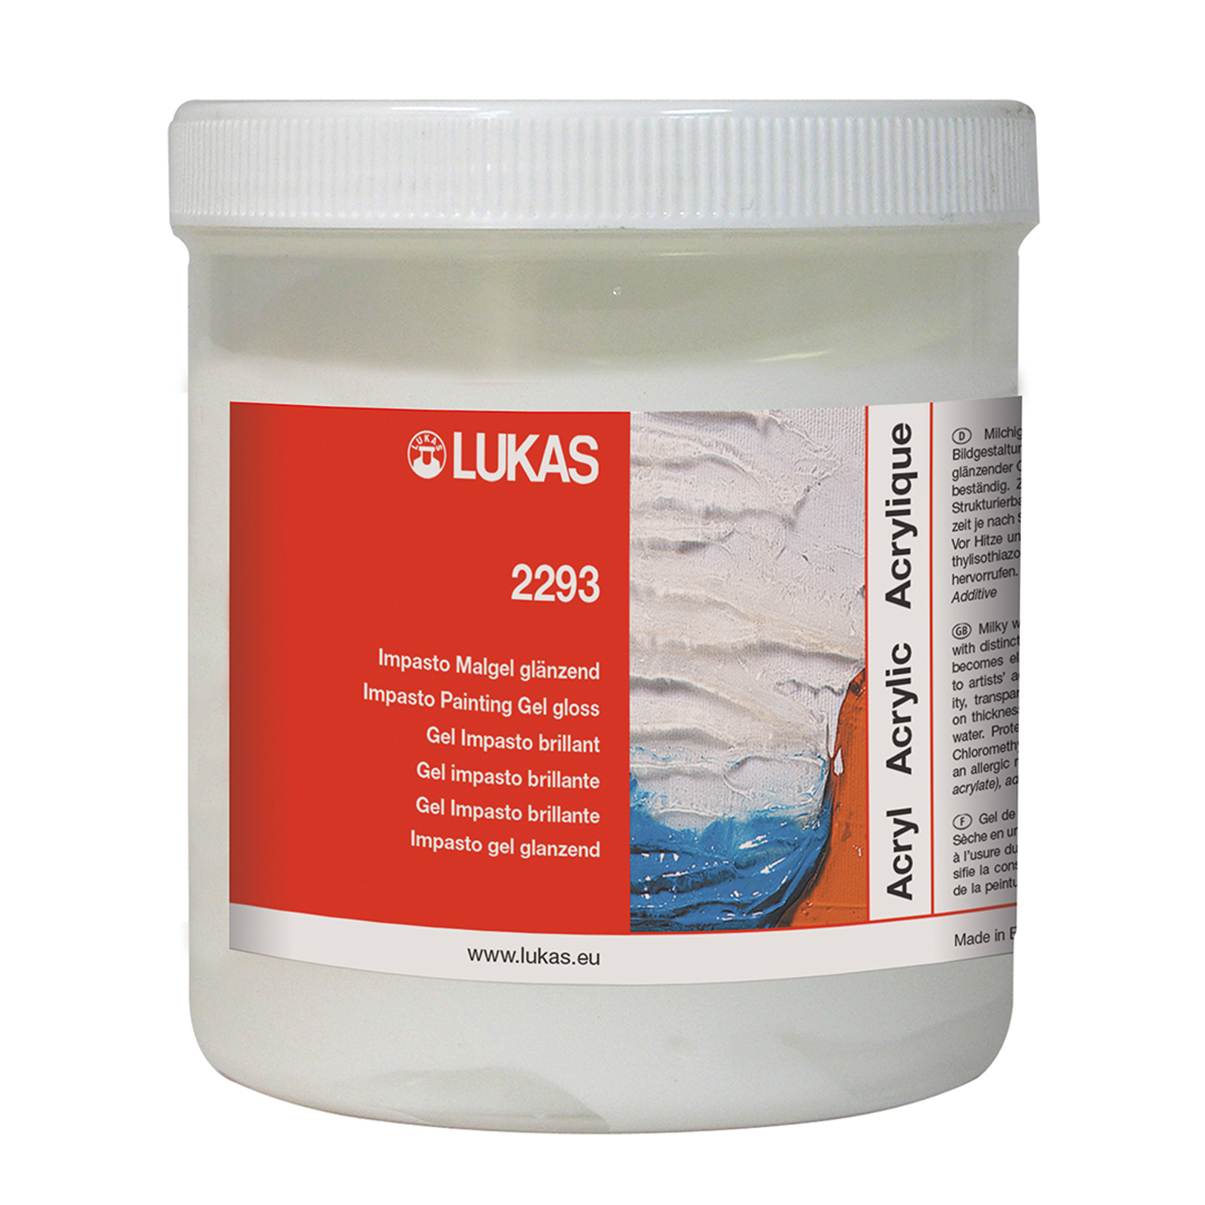 Lukas 2293 250 ml Impasto gel gloss